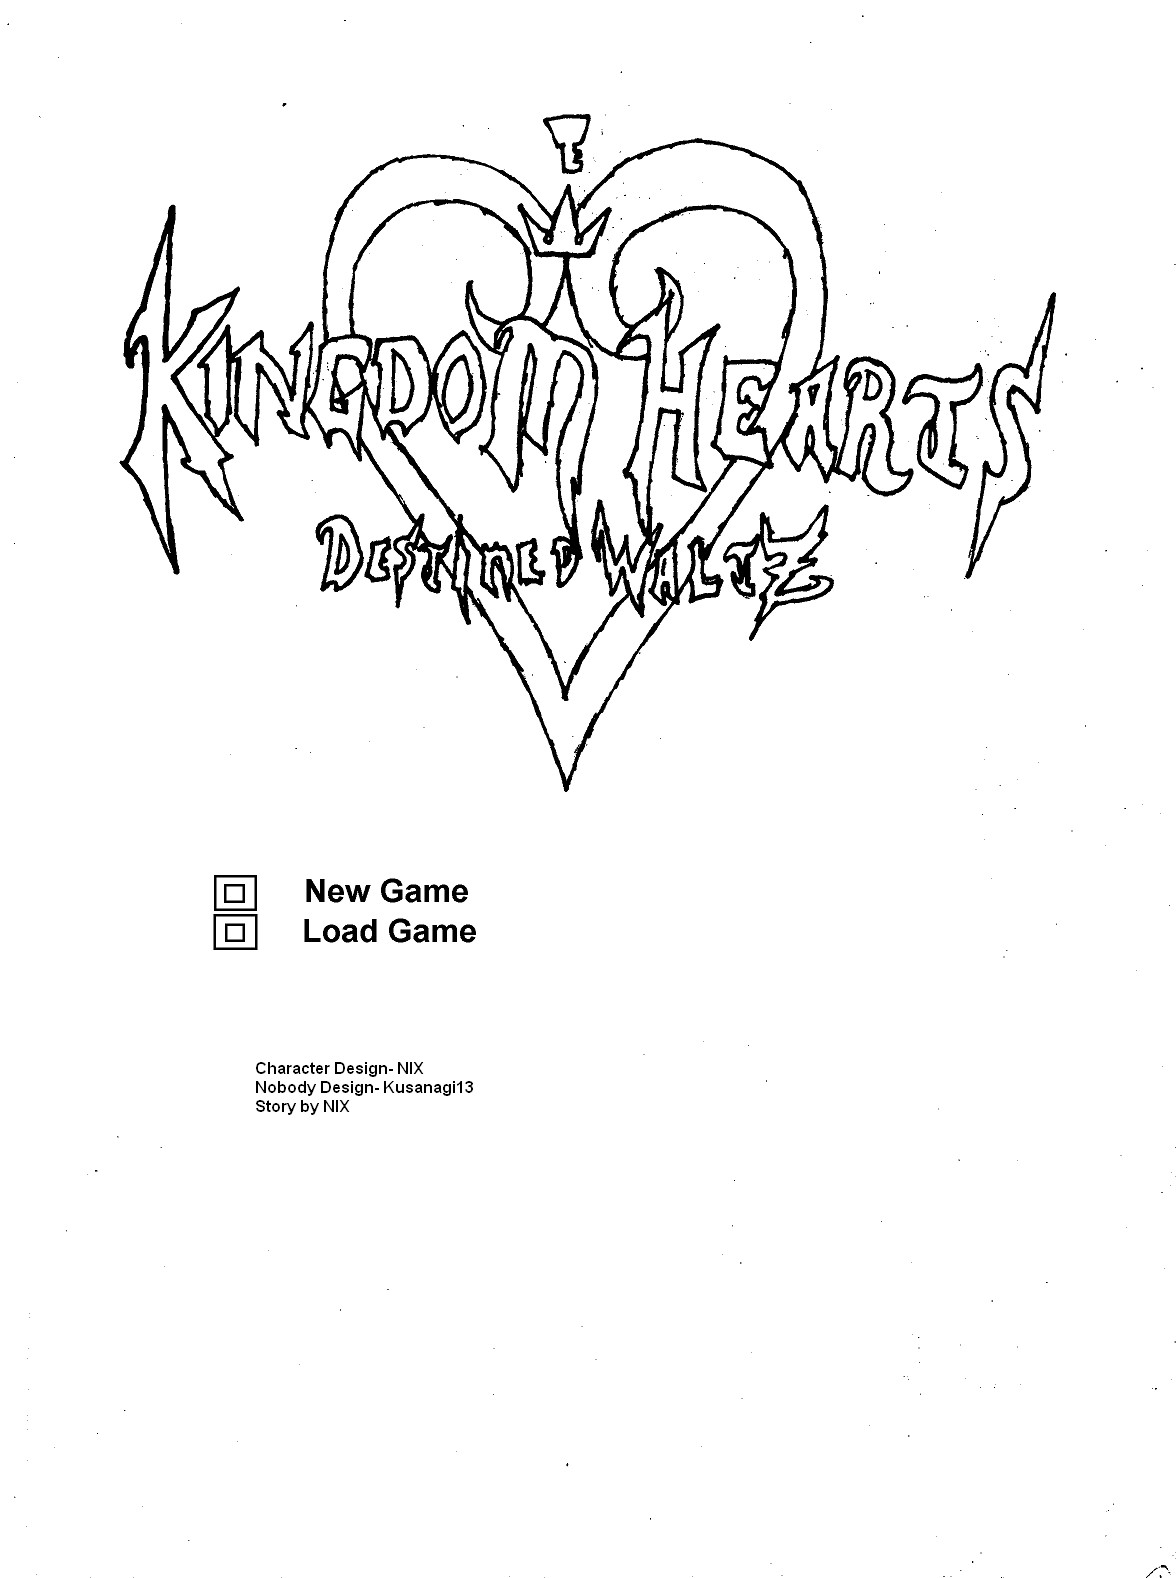 Kingdom Hearts Destined Waltz Page 1 by NIX